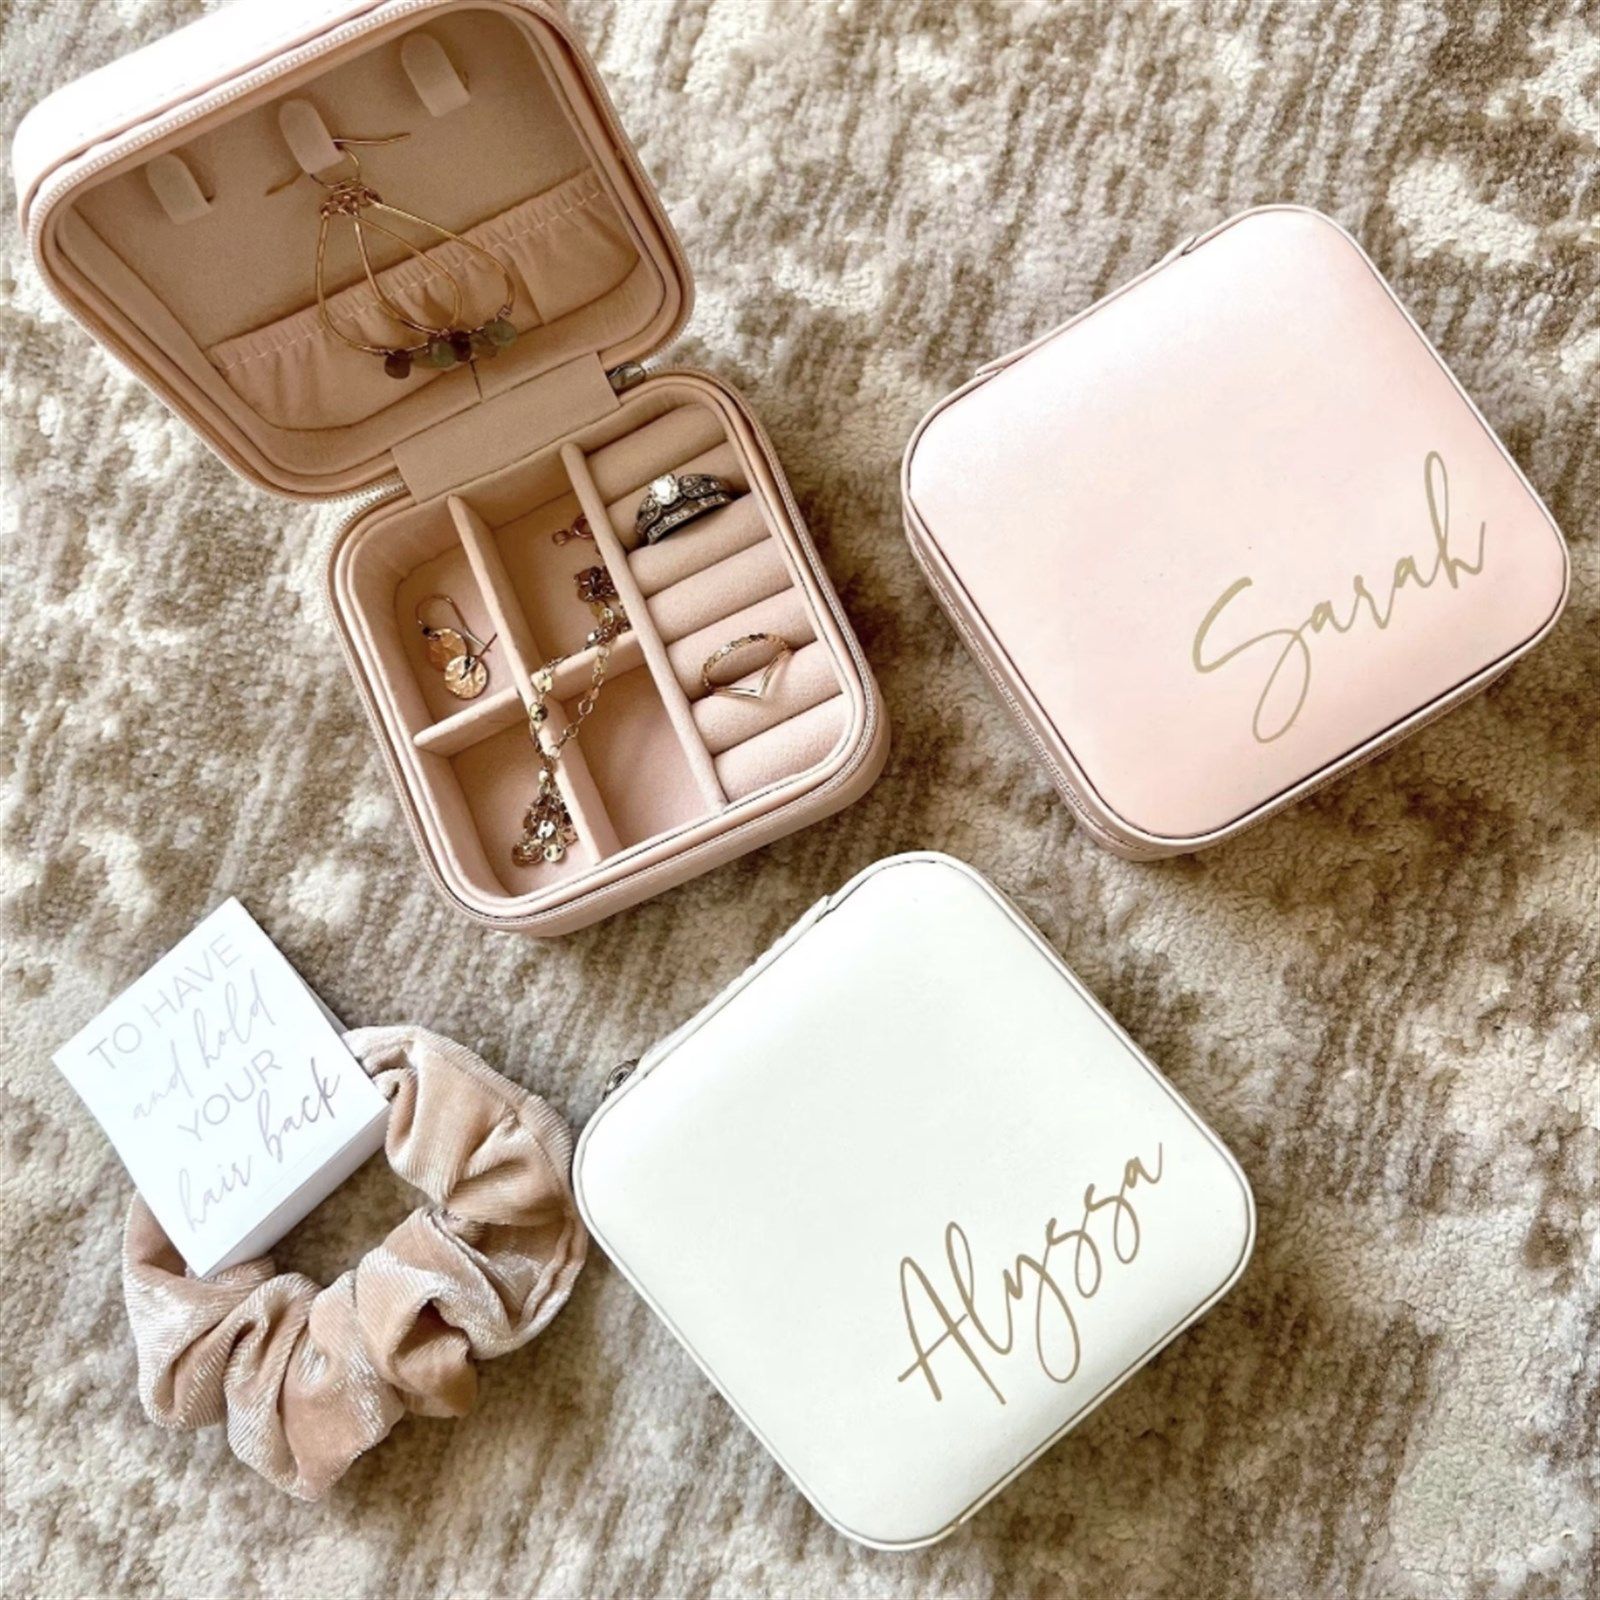 Personalized Jewelry Boxes | Jane